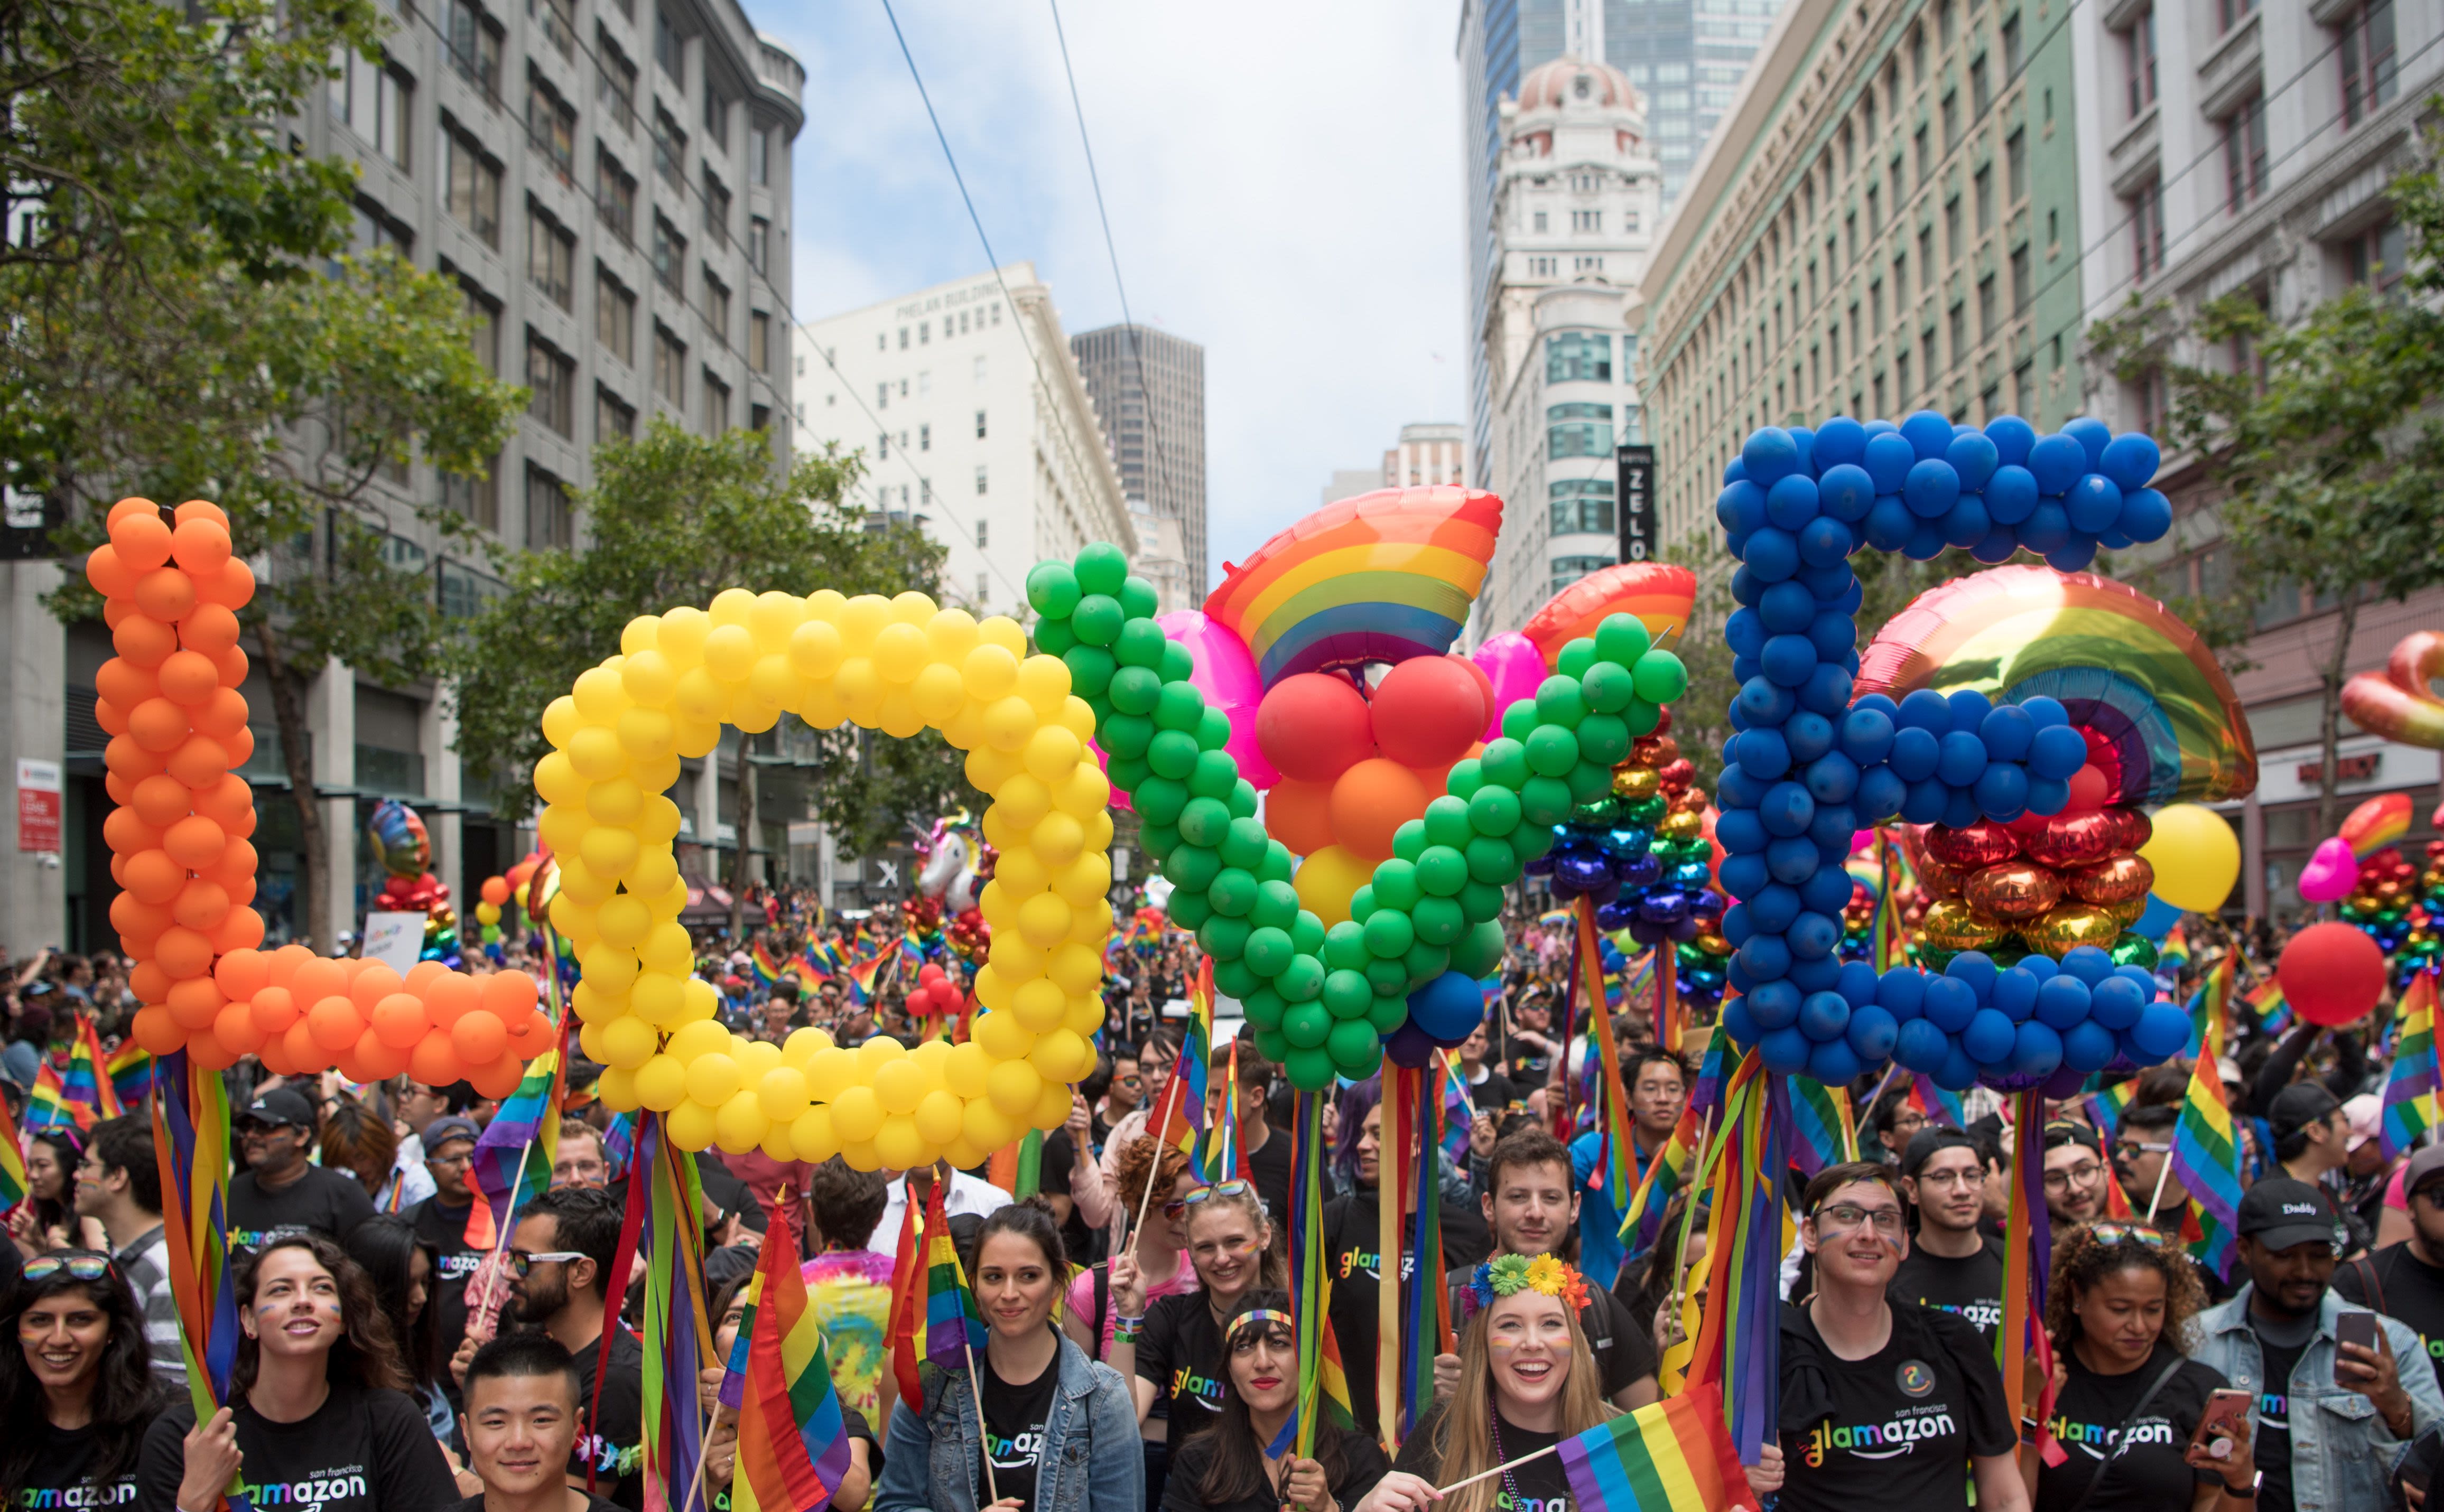 10 Facts About Transgender Pride Flag